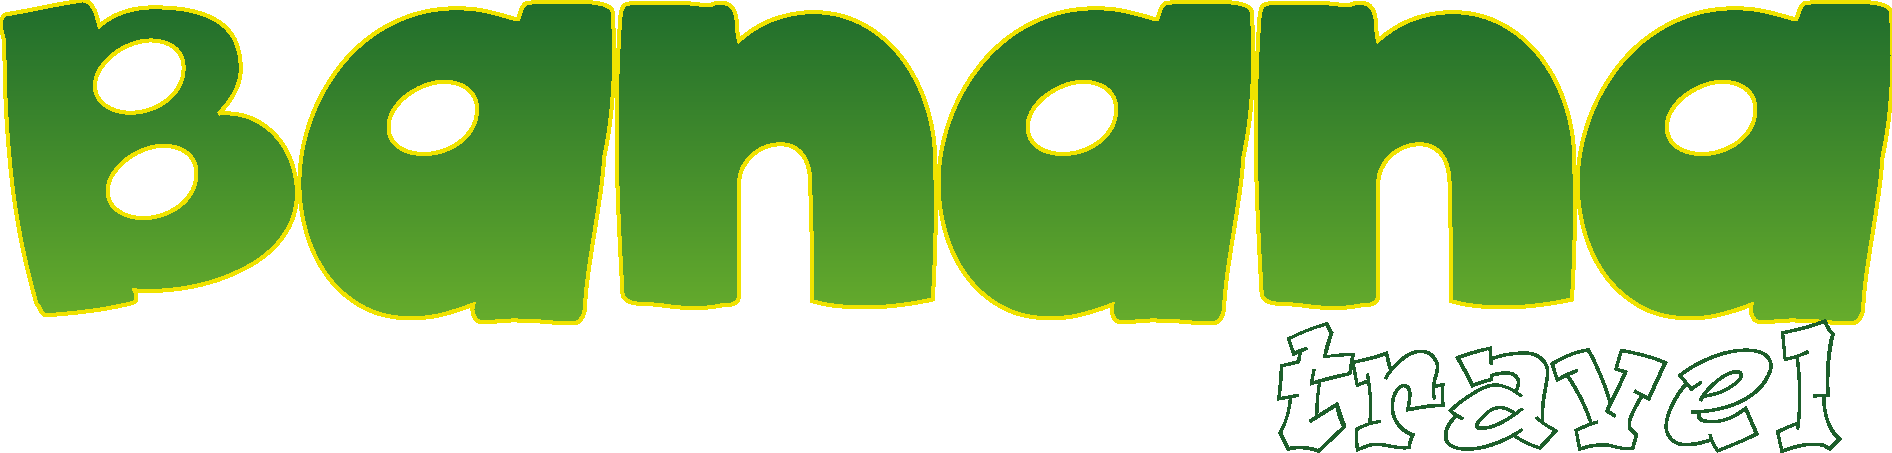 Banana Travel Logo Vector